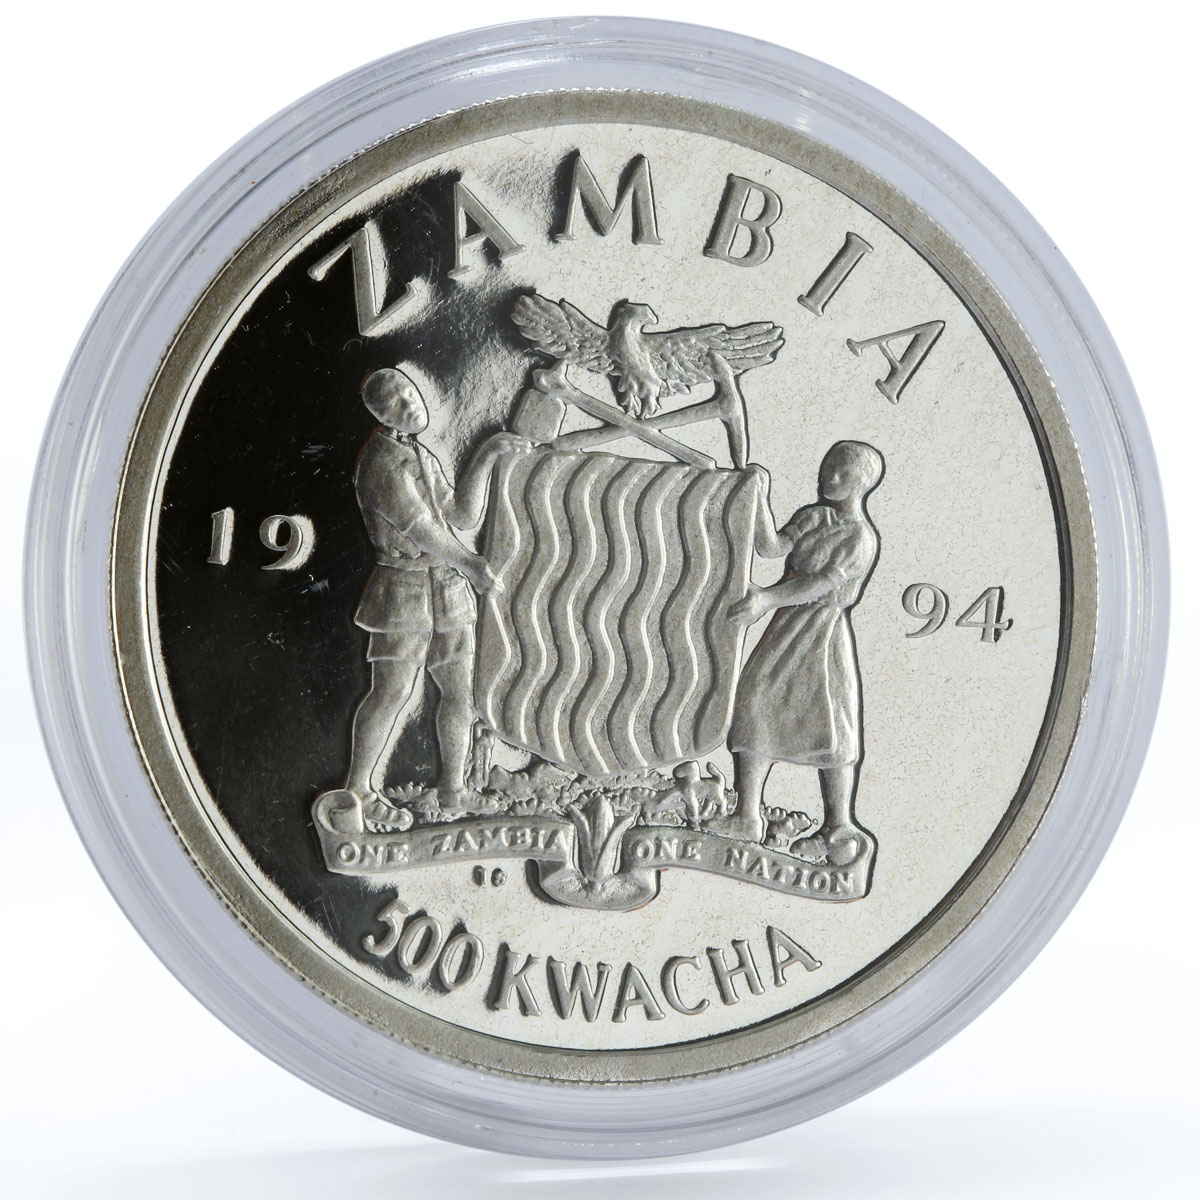 Zambia 500 kwacha Rights To Health Shaman proof silver coin 1994